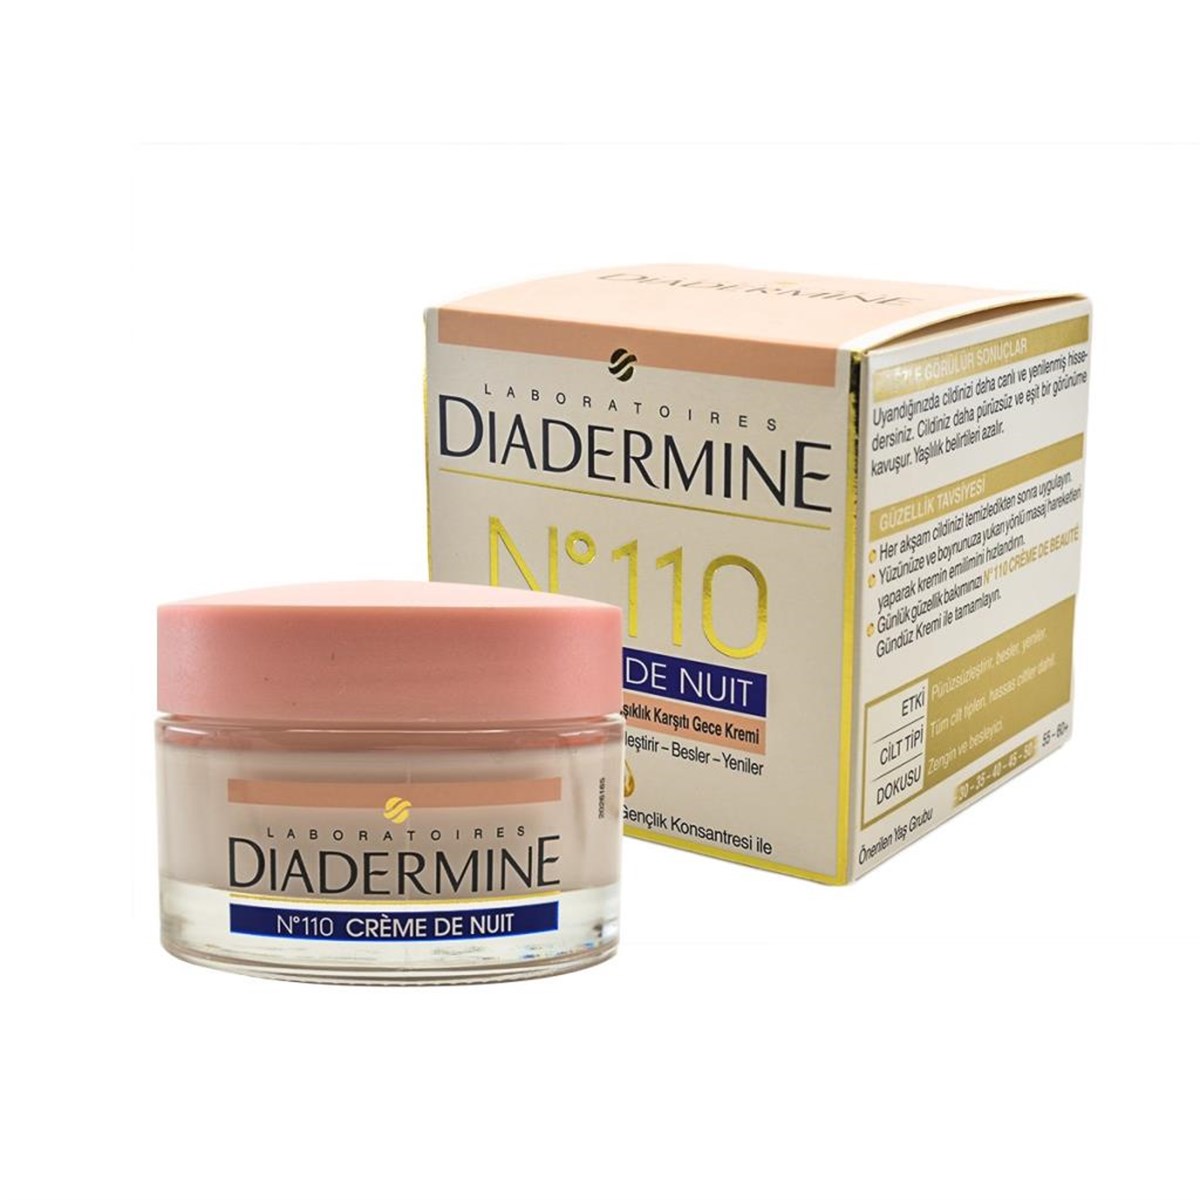 Diadermine No110 Gece Kremi 50 Ml | Cossta Cosmetic Station